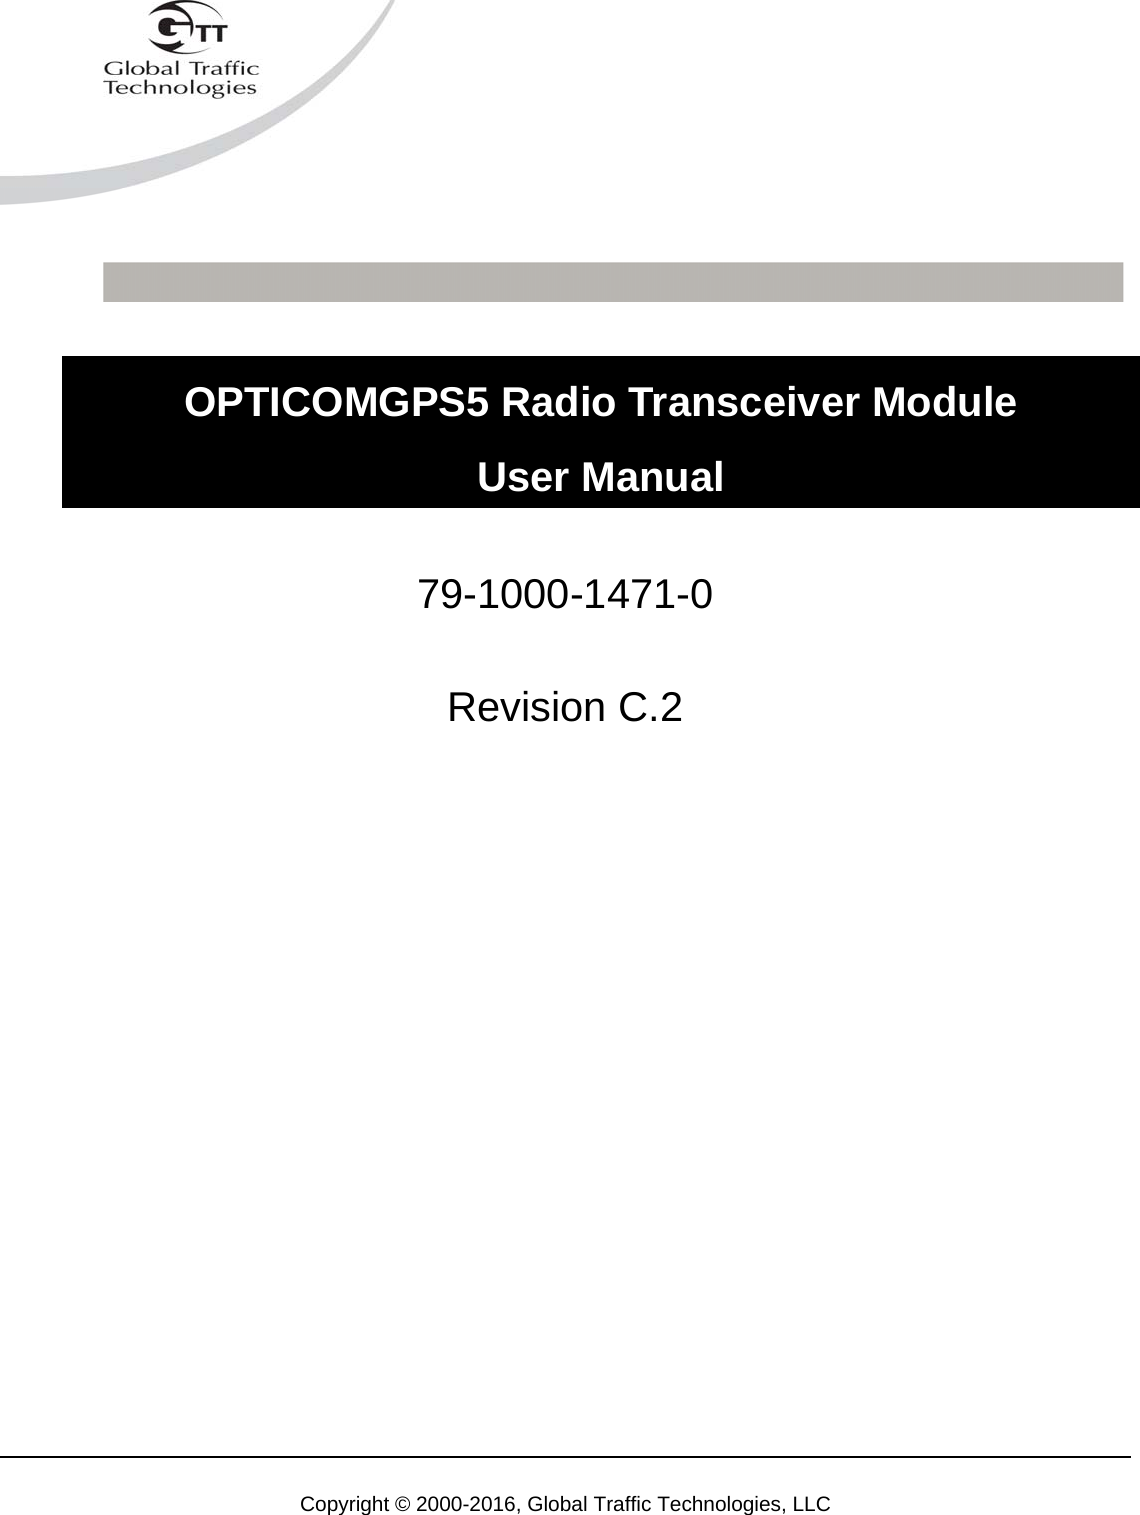   Copyright © 2000-2016, Global Traffic Technologies, LLC          79-1000-1471-0  Revision C.2                  OPTICOMGPS5 Radio Transceiver Module User Manual 